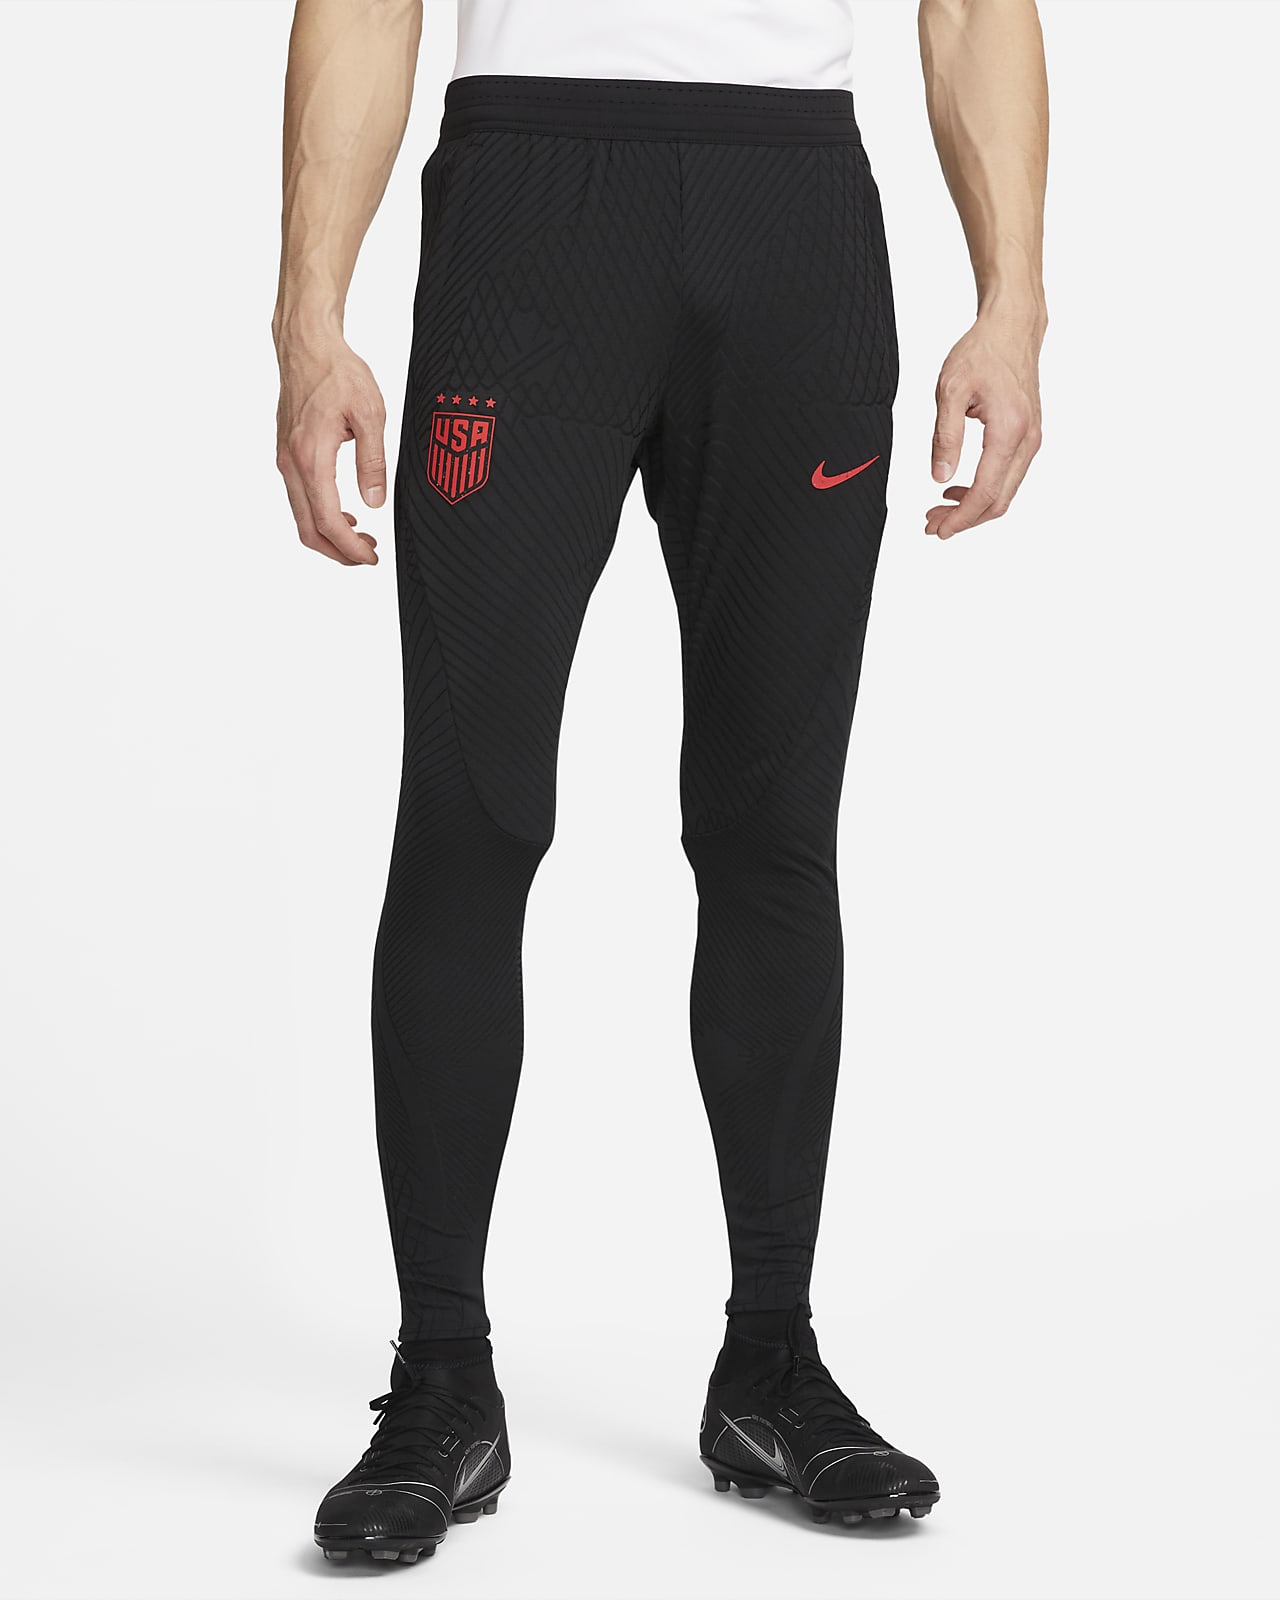 kan niet zien Corrupt Shuraba U.S Strike Elite Men's Nike Dri-FIT ADV Knit Soccer Pants. Nike.com